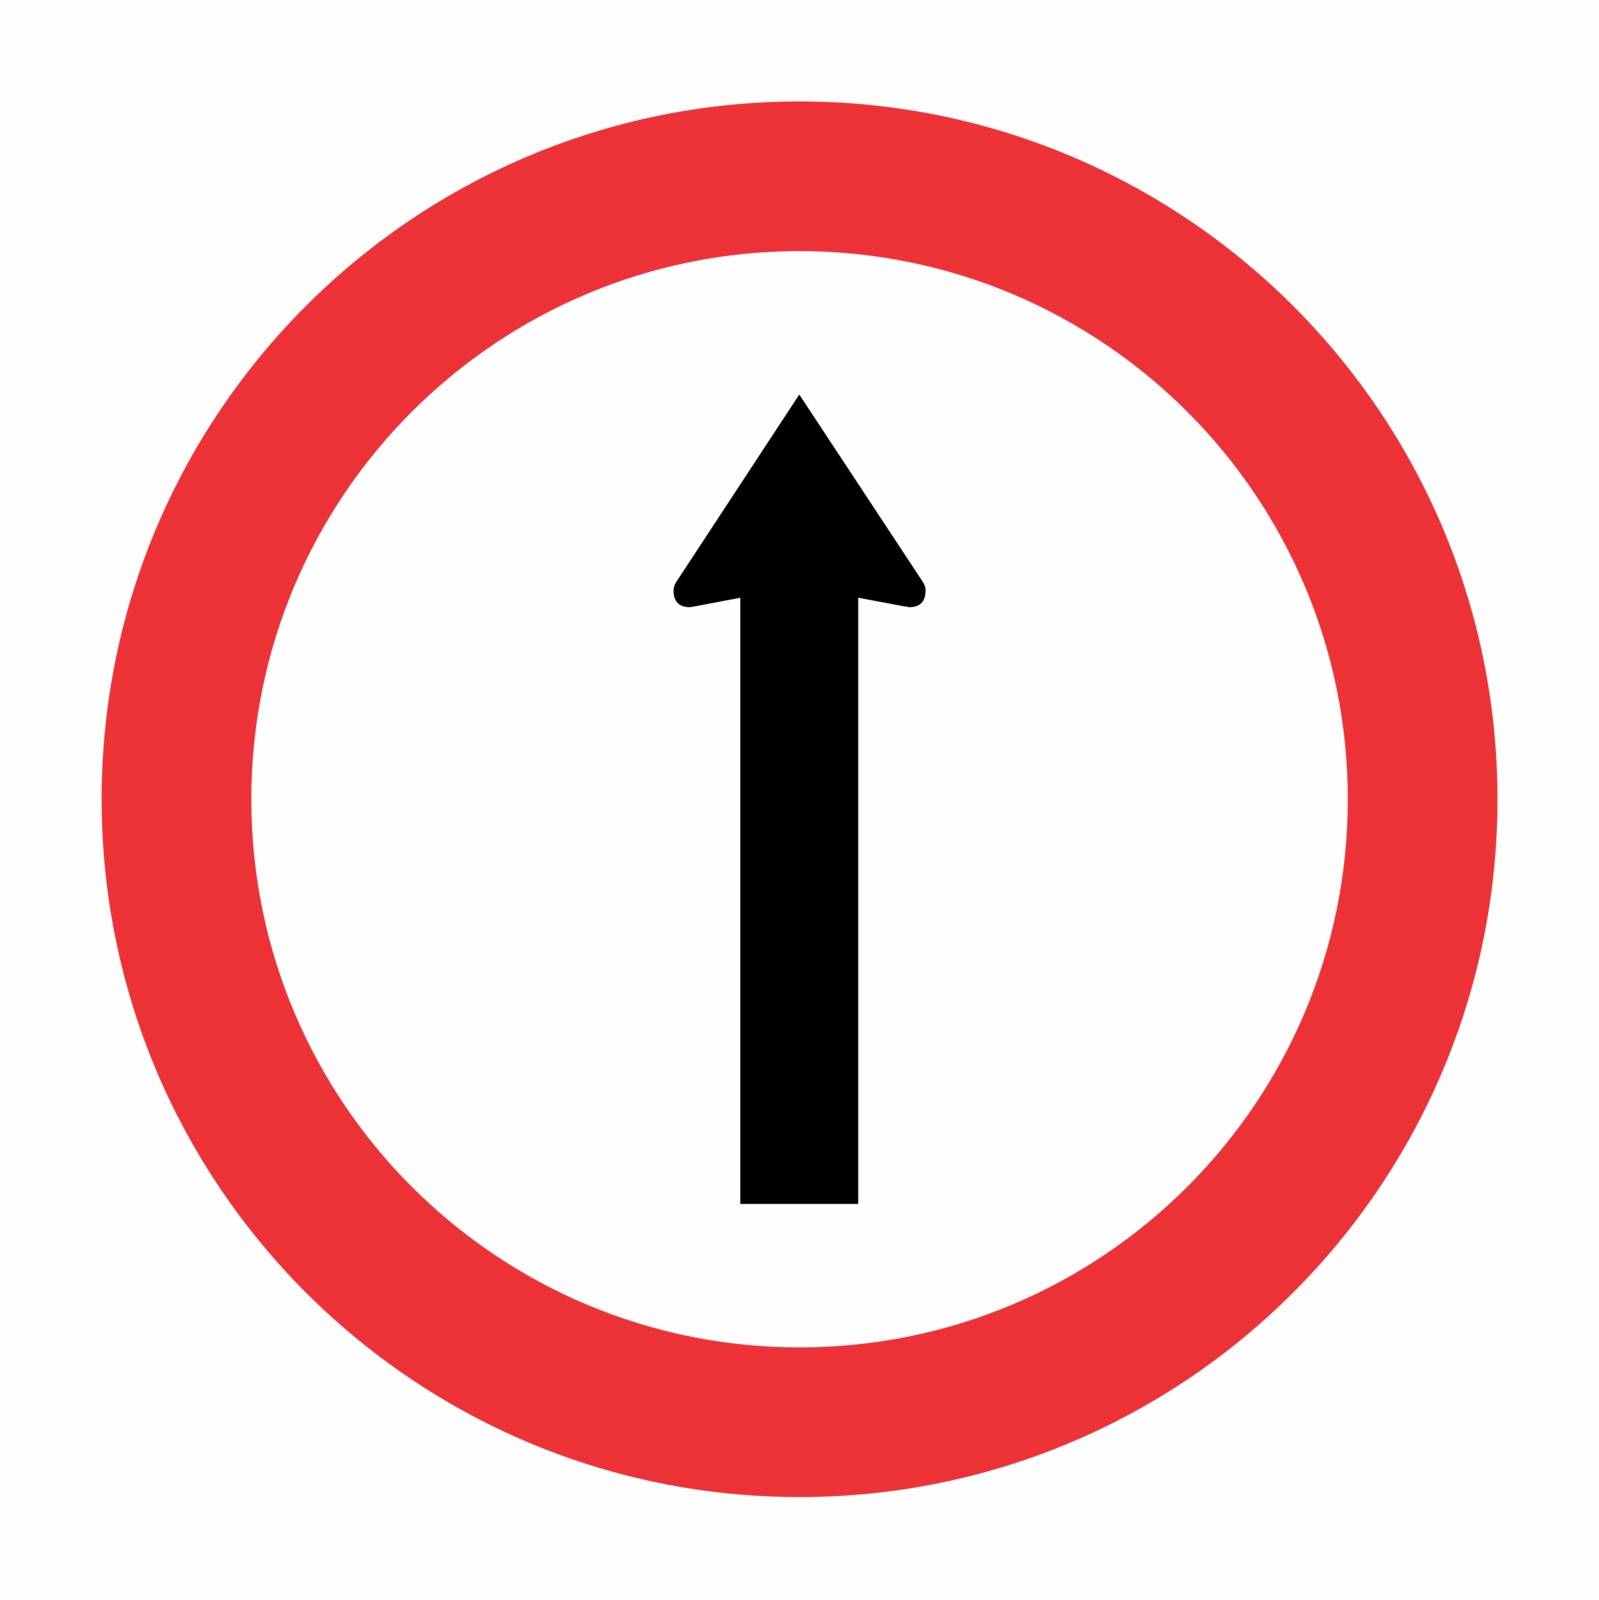 Straight traffic sign symbol on white background